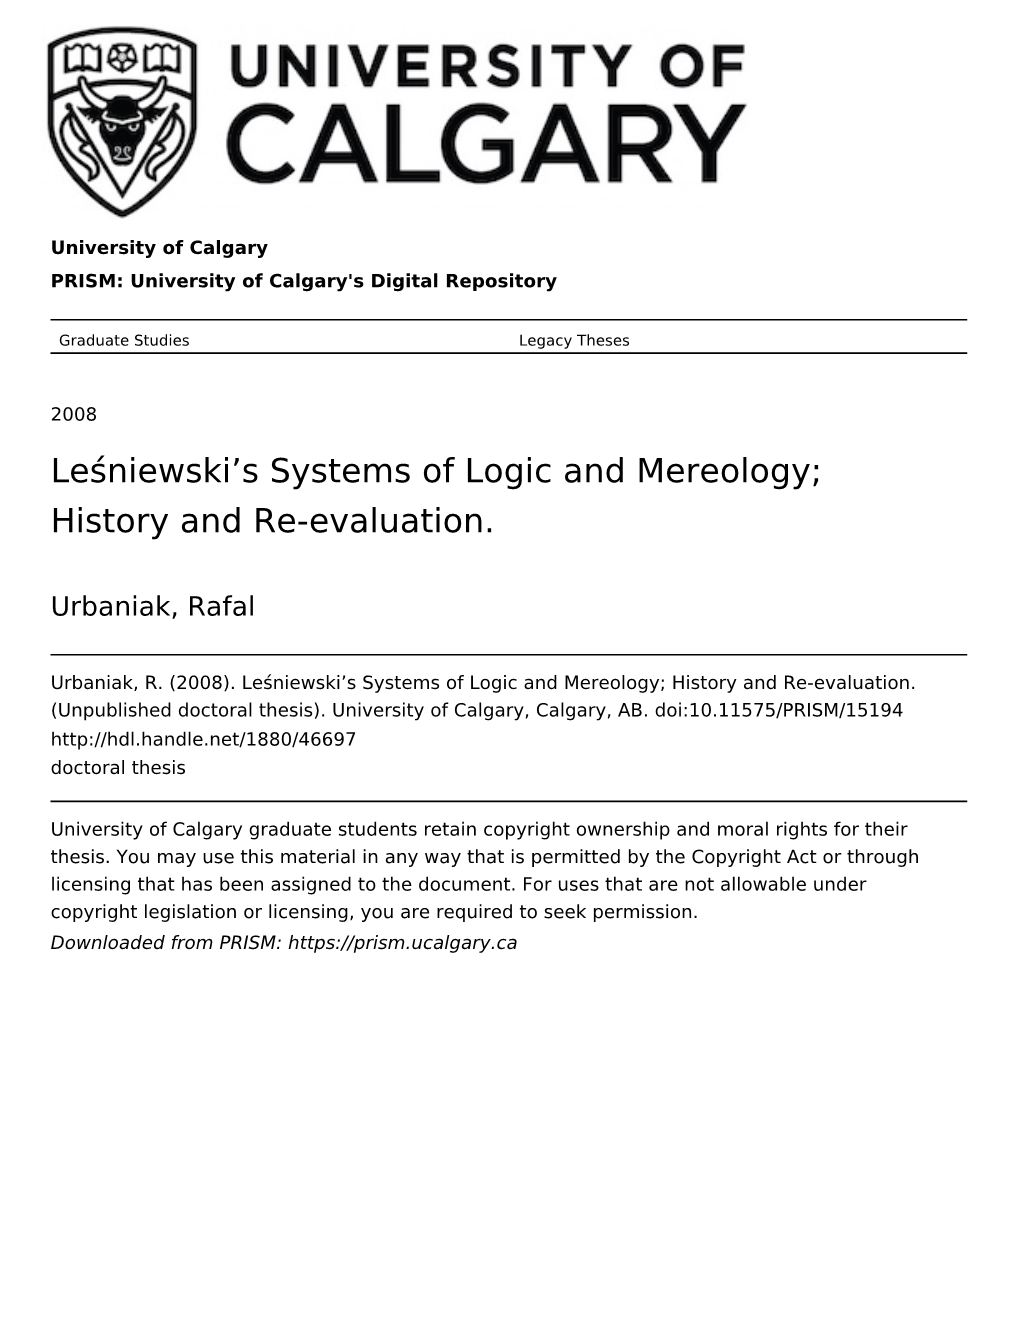 Leśniewski's Systems of Logic and Mereology